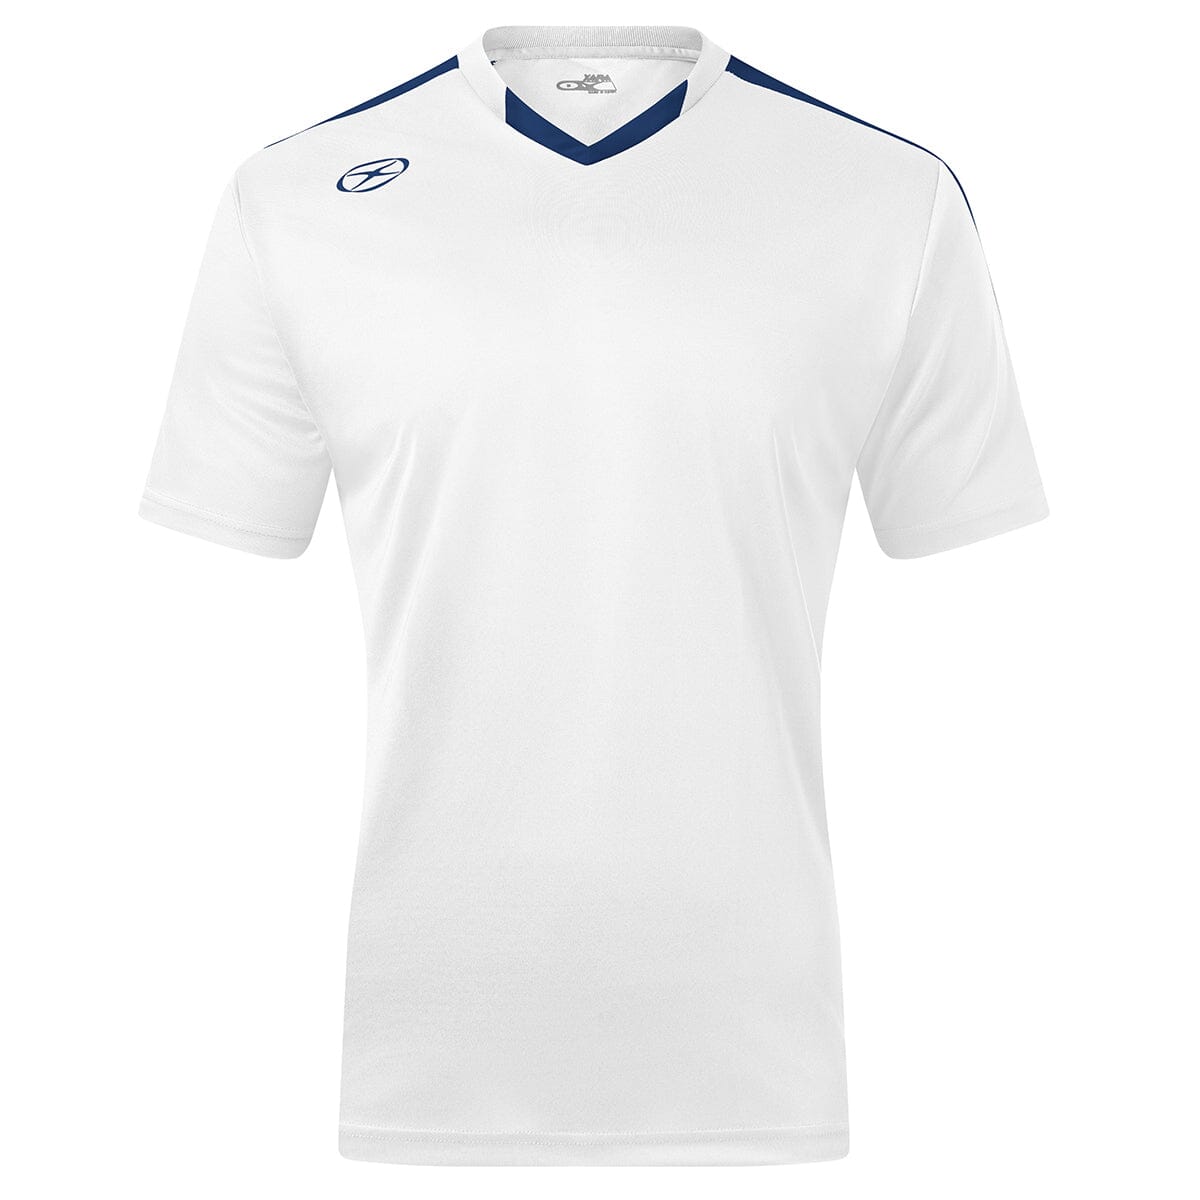 Britannia Jersey - Away Colors - Male Shirt Xara Soccer White/Navy Medium 